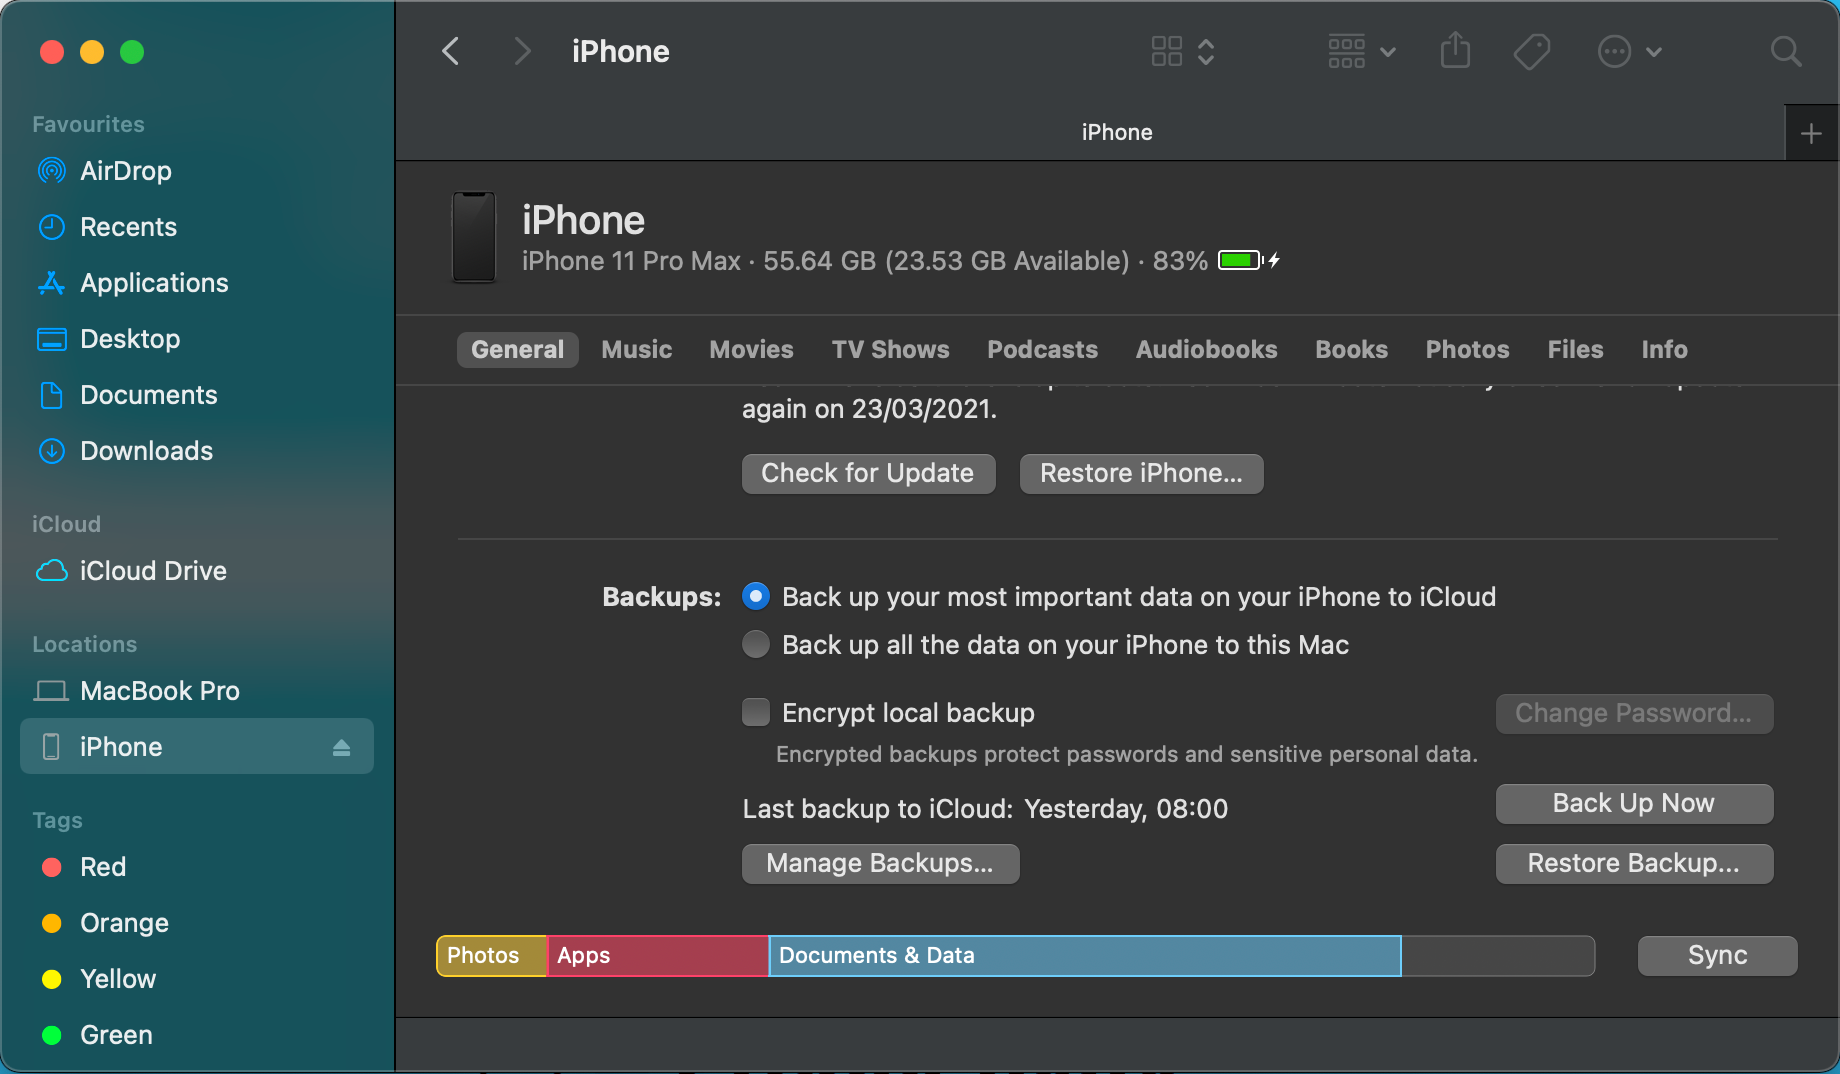 The Restore iPhone screen on a Mac